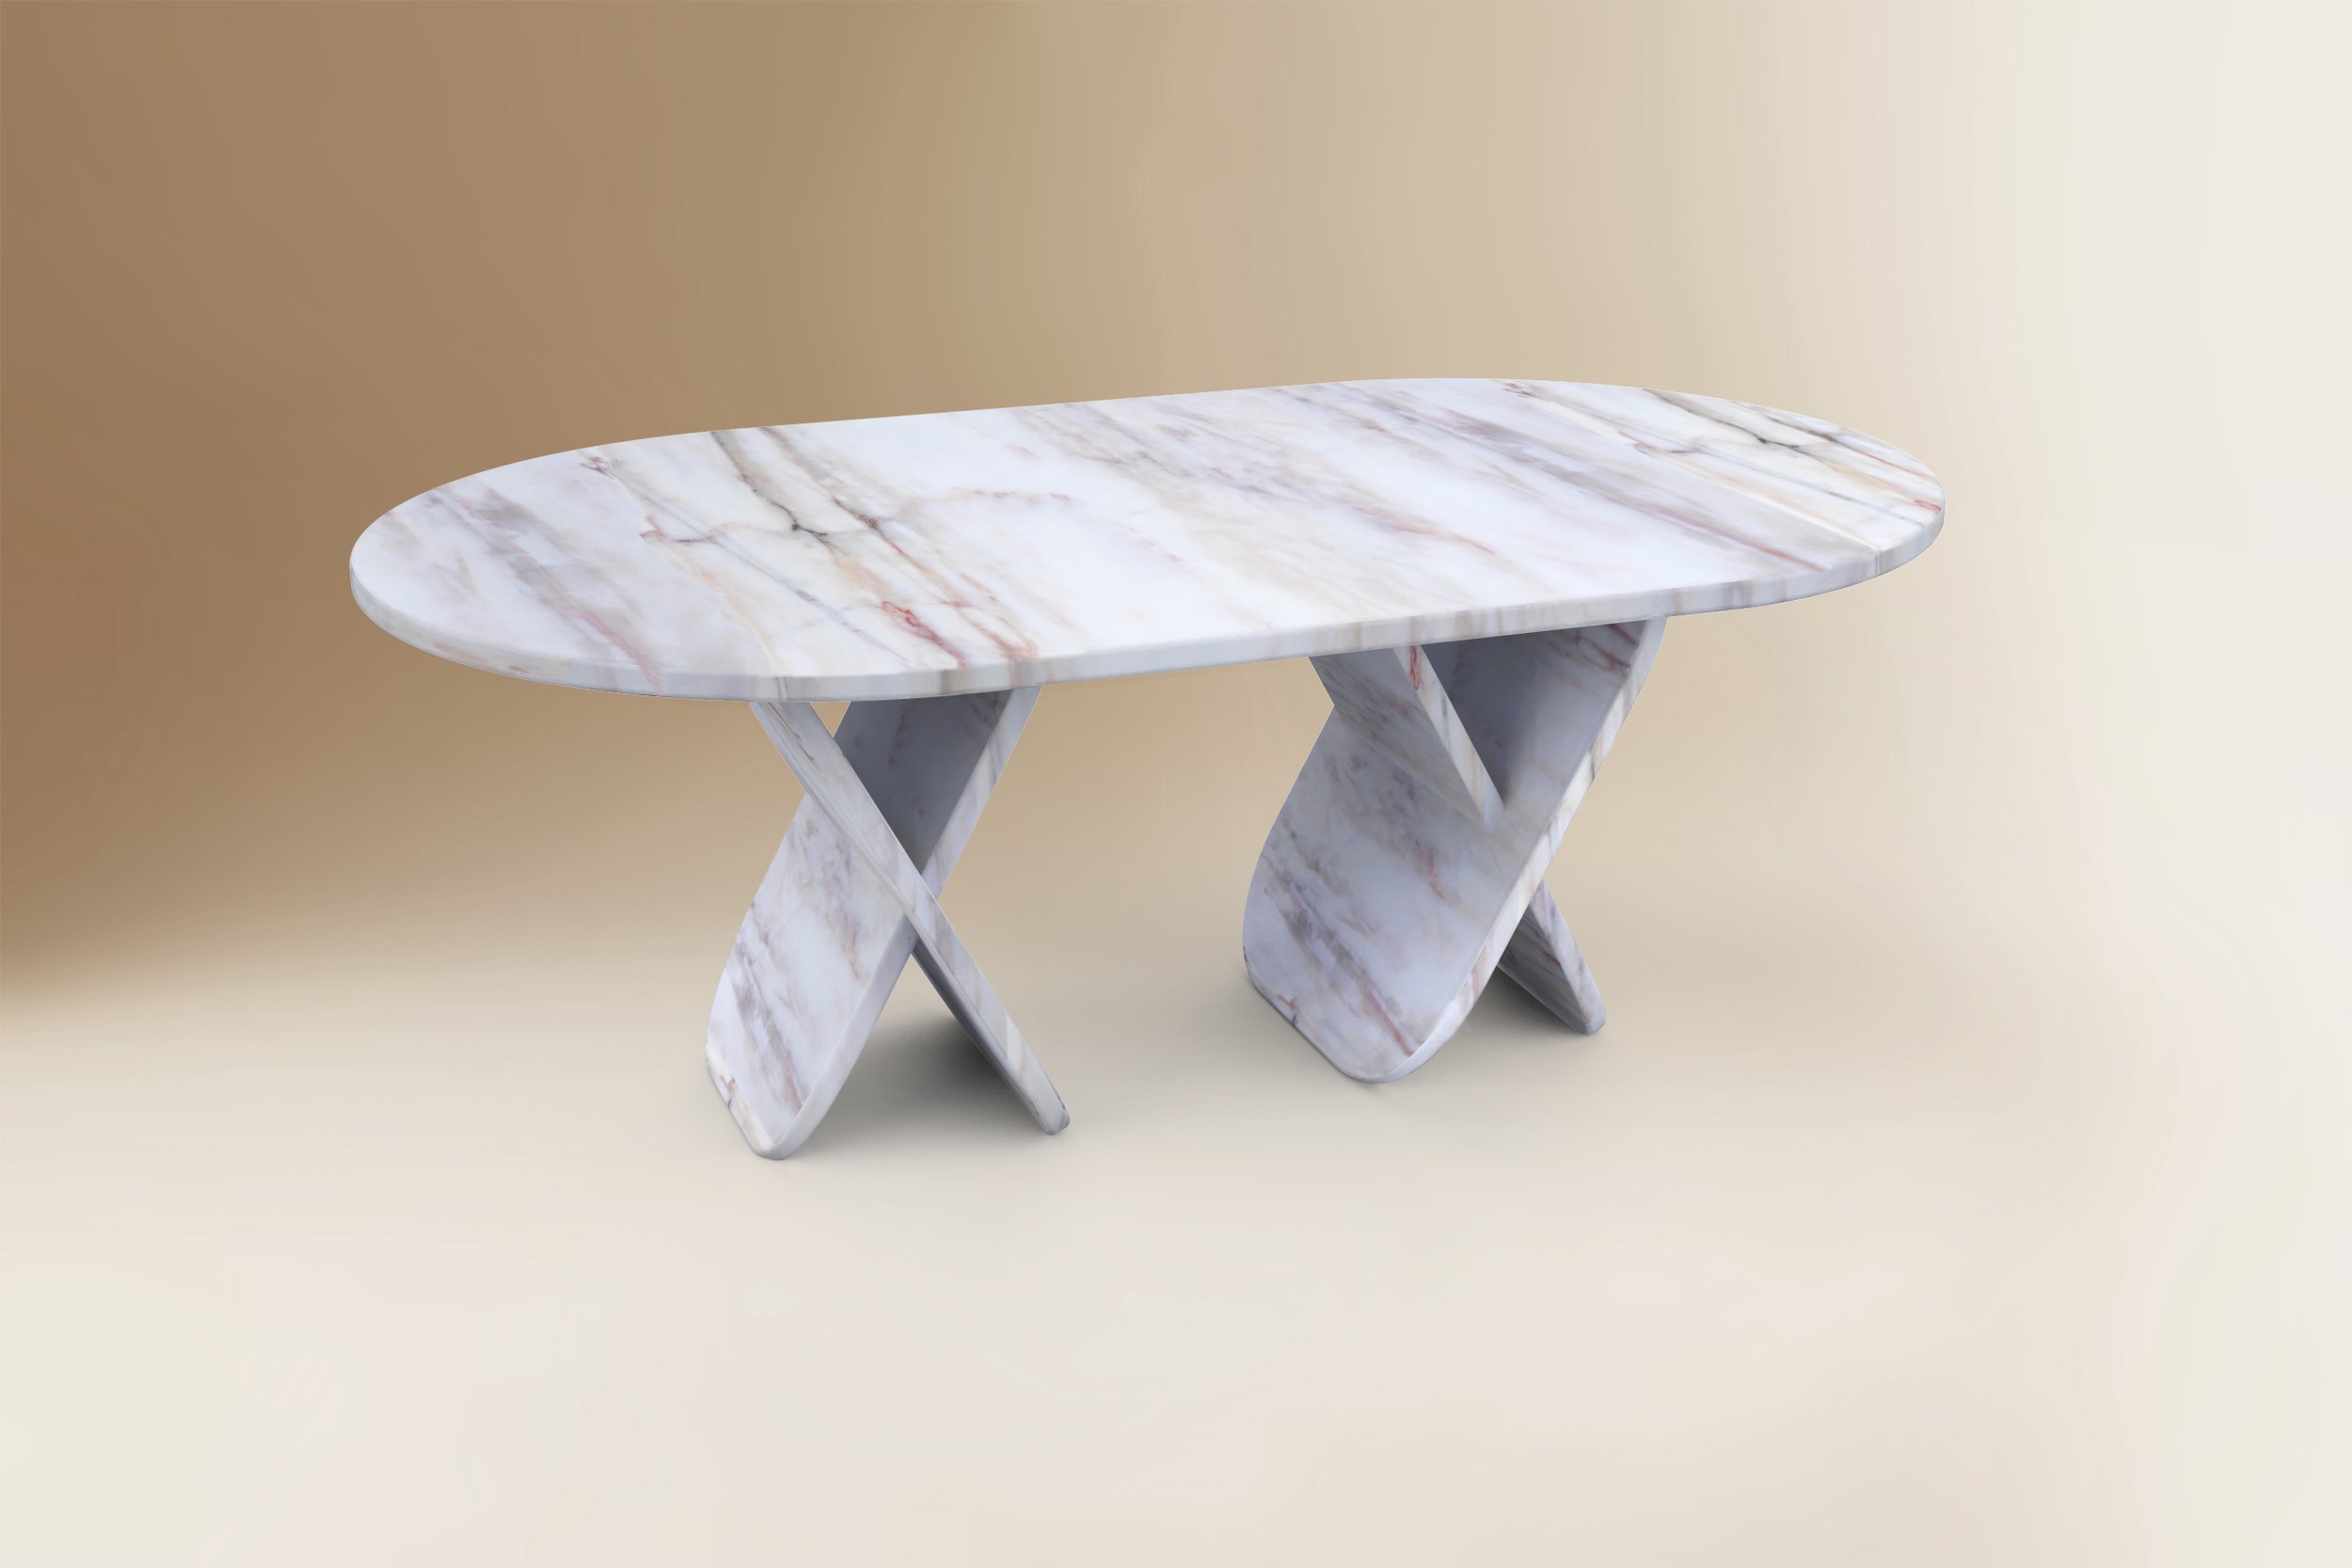 Balance oval table design dovain studio sergio prieto designer - cópia.jpg